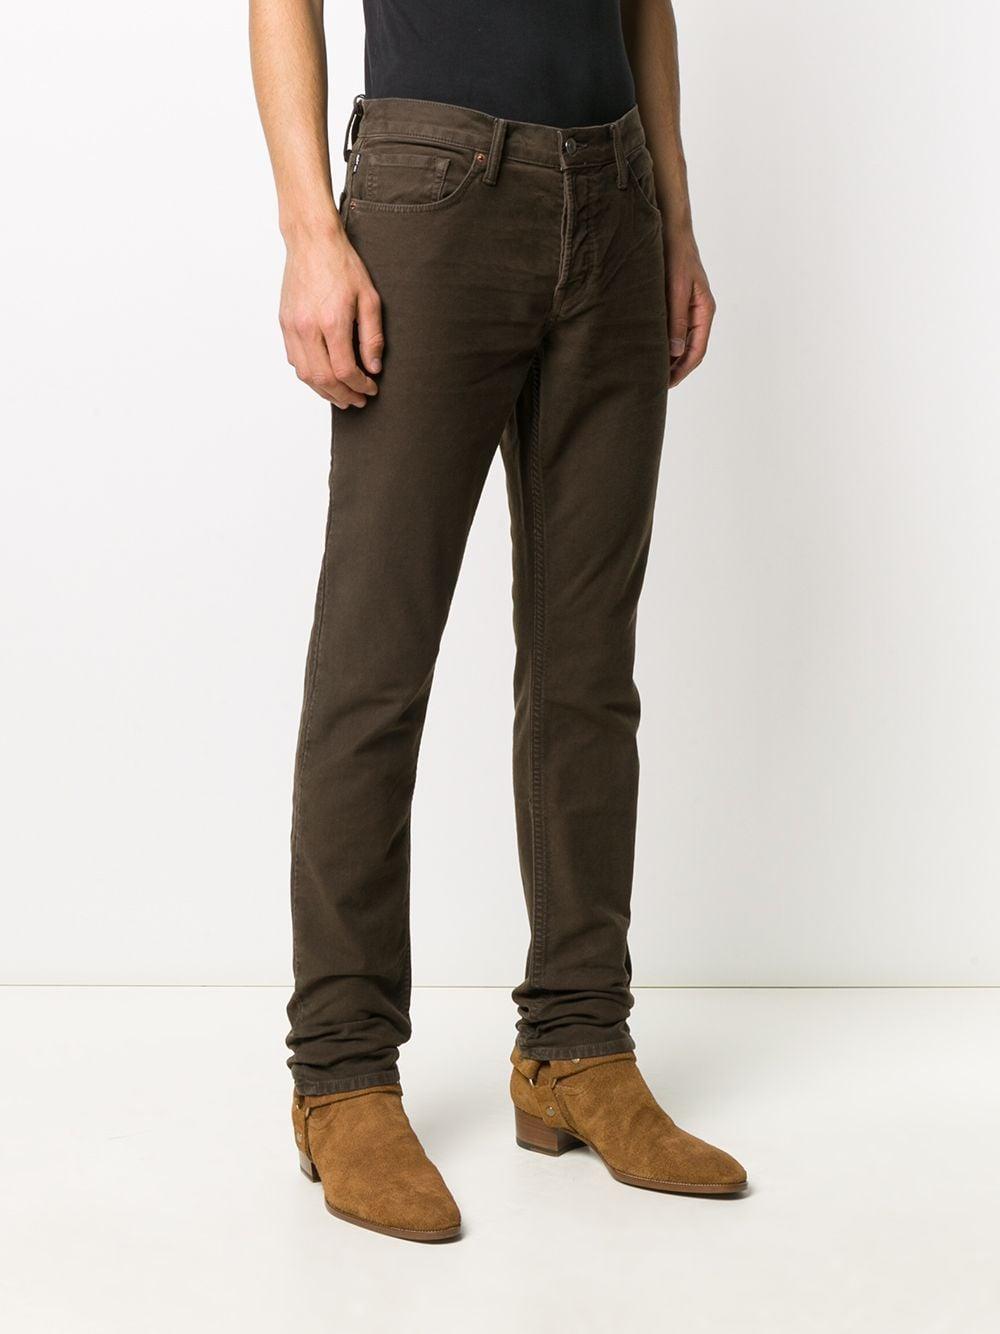 Tom Ford Denim Mid-rise Straight-leg Jeans in Brown for Men - Lyst